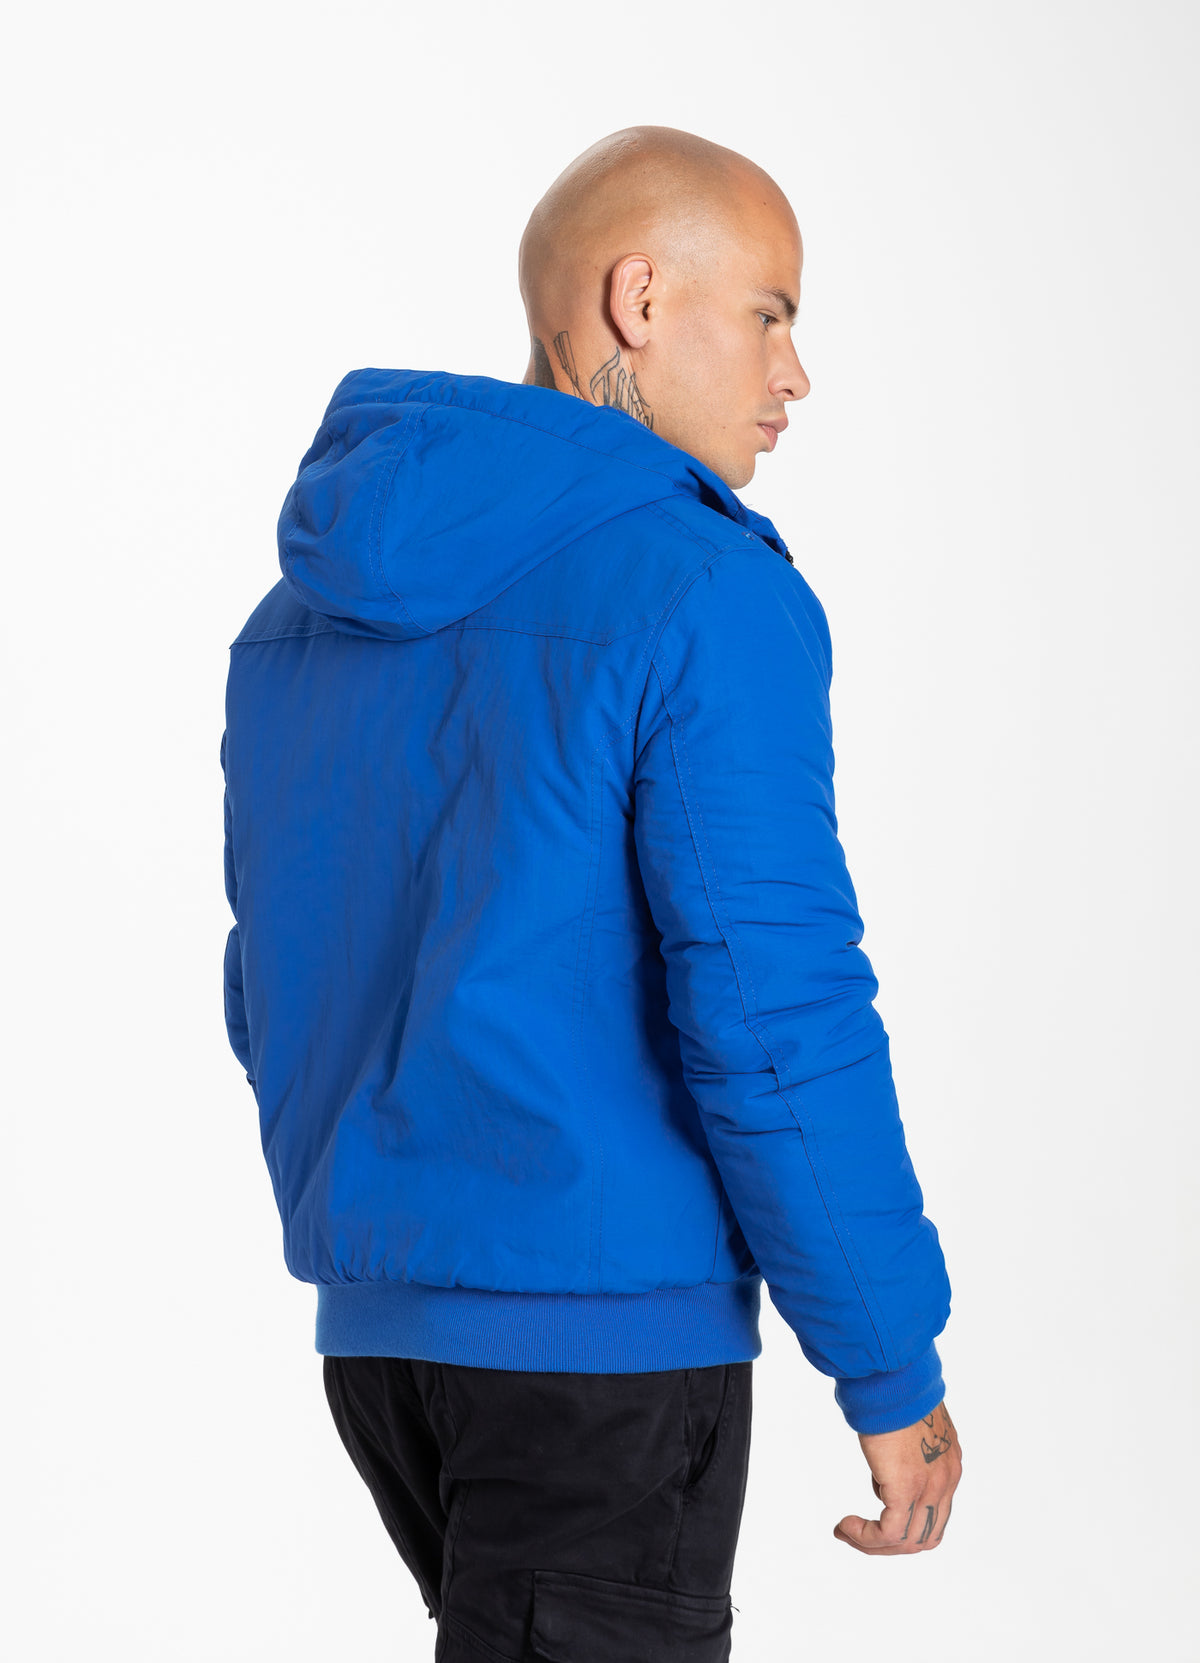 Hooded Jacket Spinnaker 2 Royal Blue - Pitbull West Coast International Store 